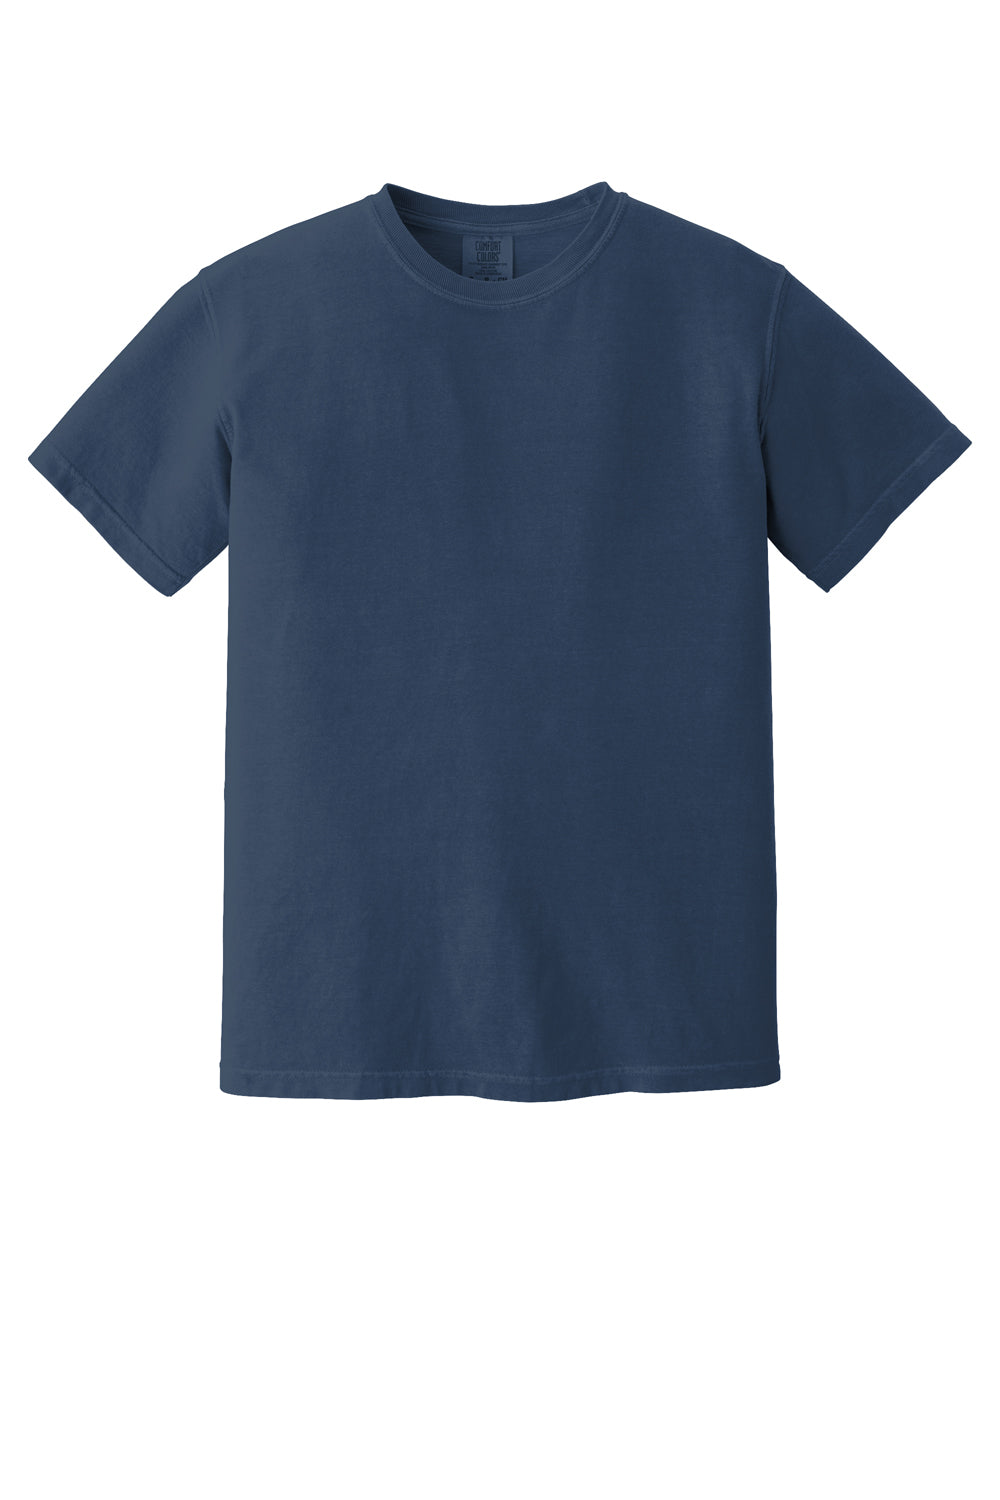 Comfort Colors Mens Short Sleeve Crewneck T-Shirt China Blue Flat Front